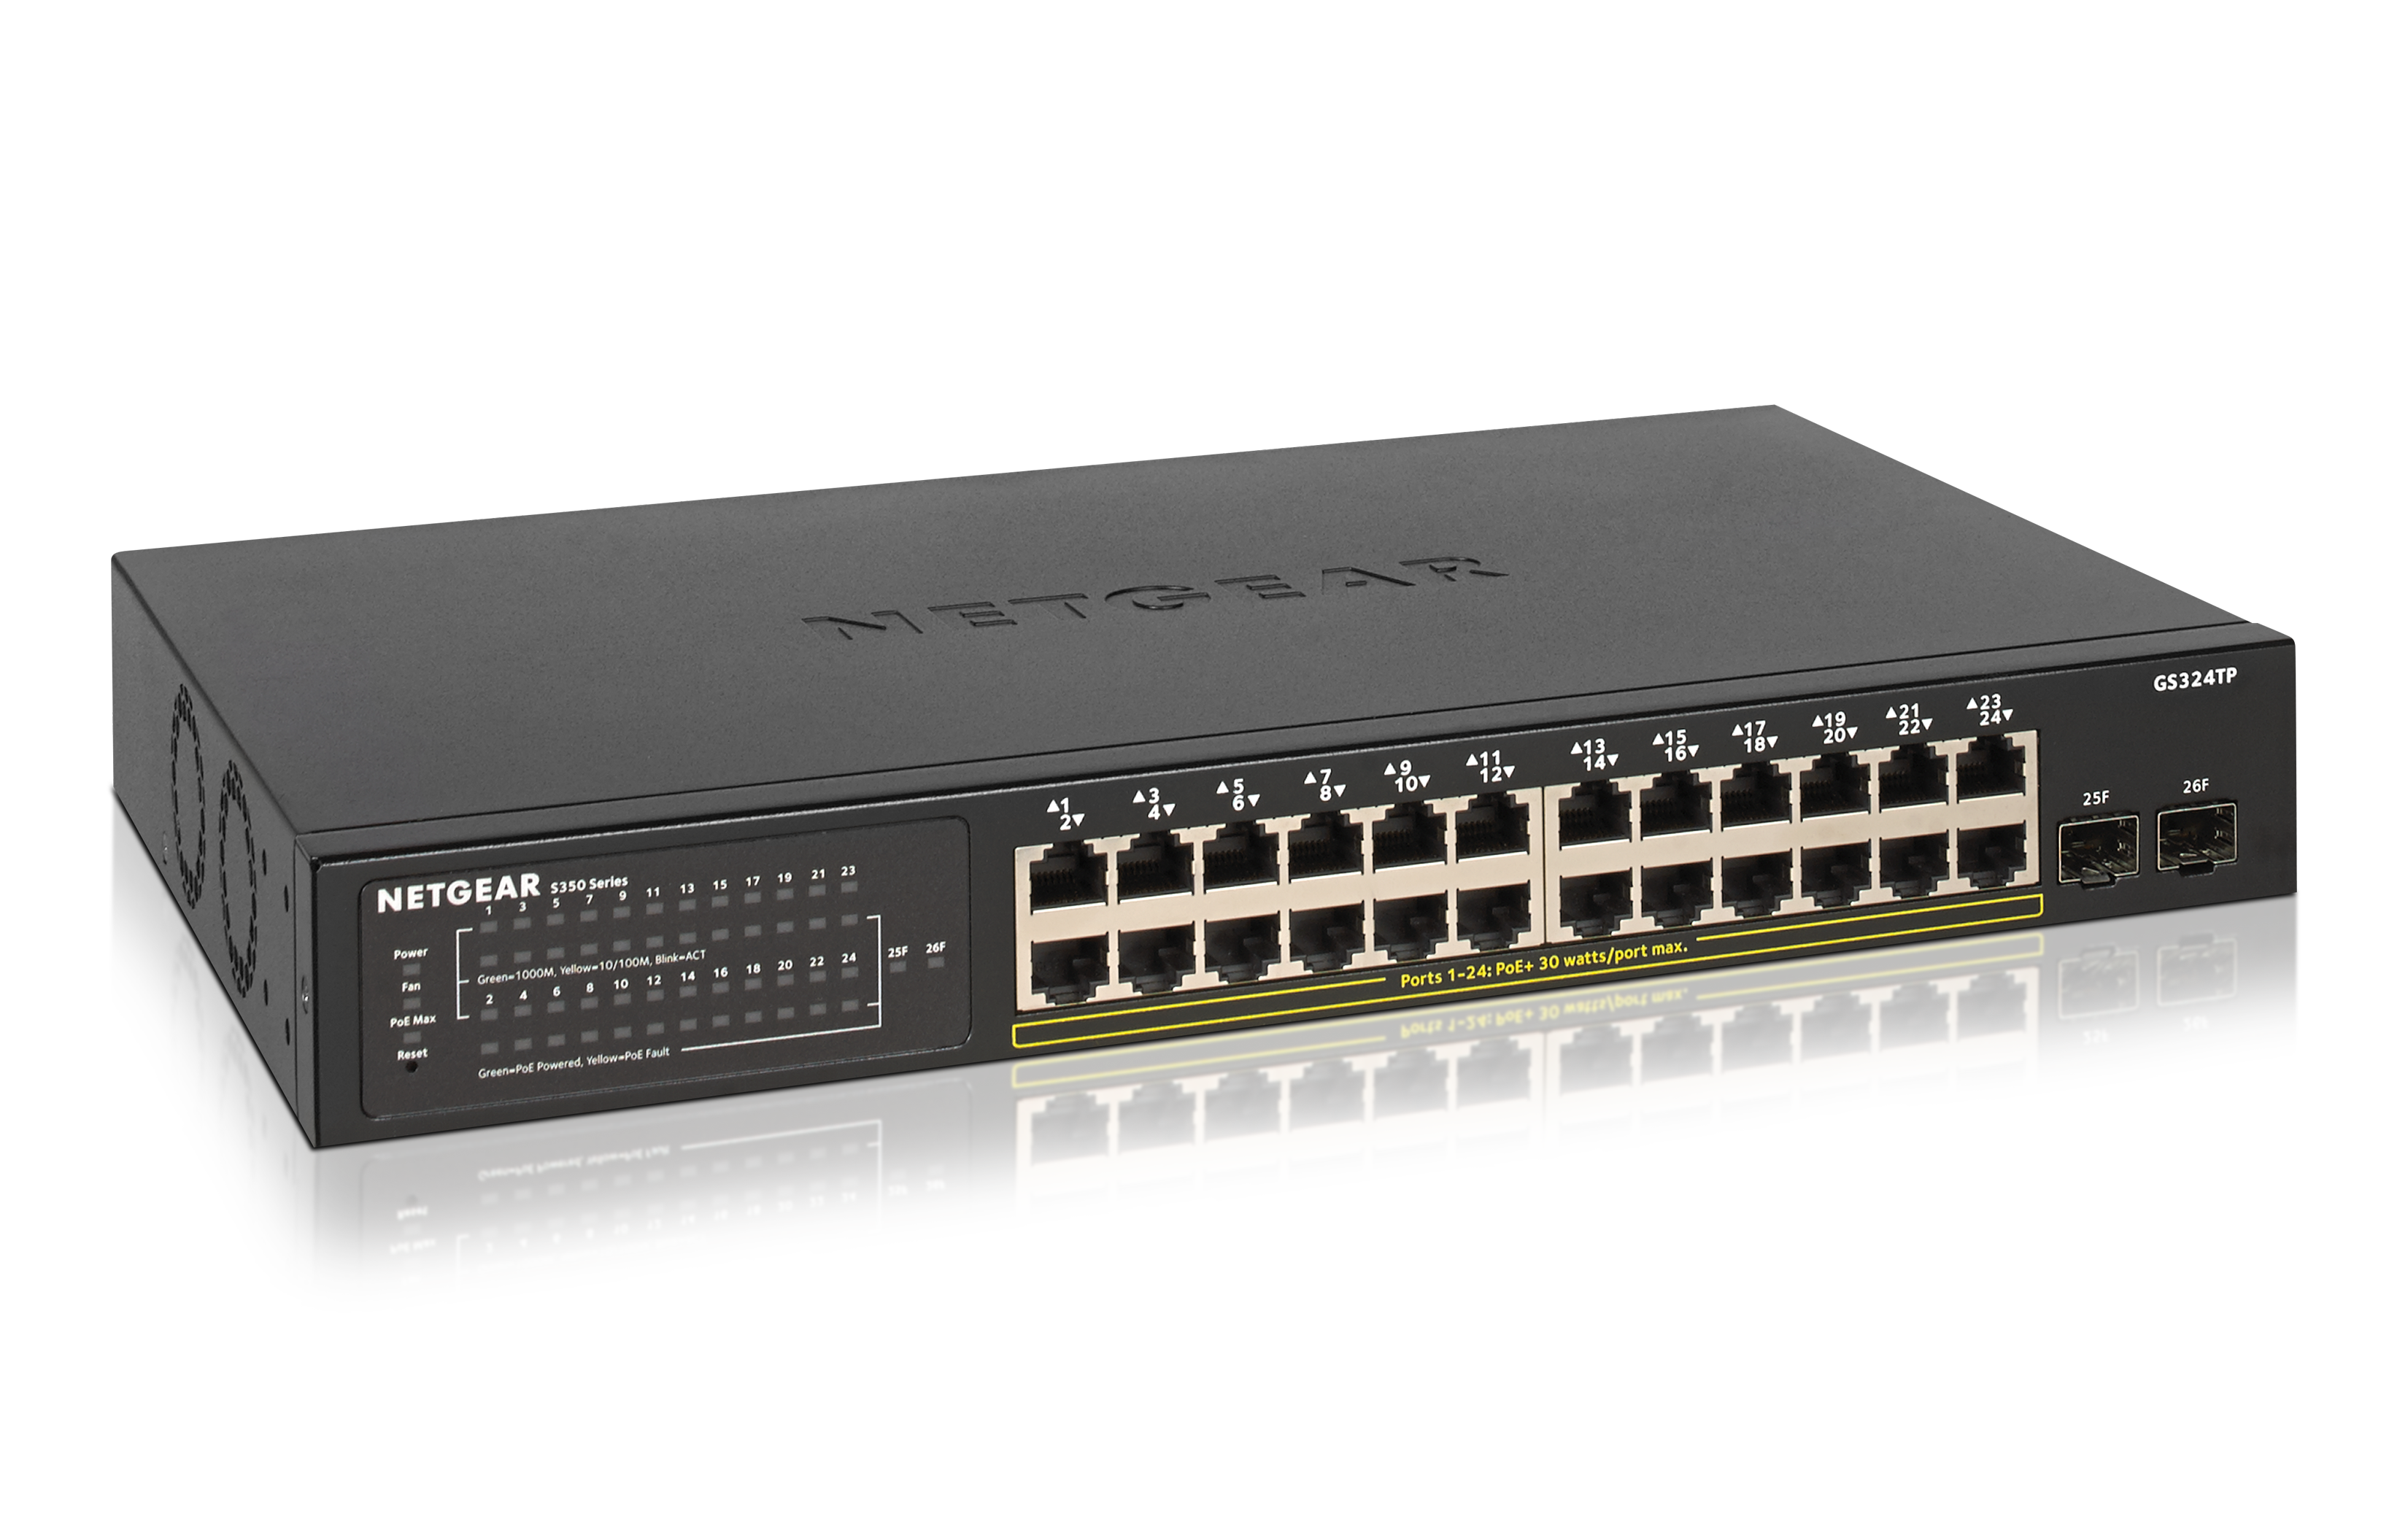 NETGEAR S350 Series 24-Port Gb PoE+ Ethernet Smart Managed Pro Switch, 2 SFP Ports, GS324TP